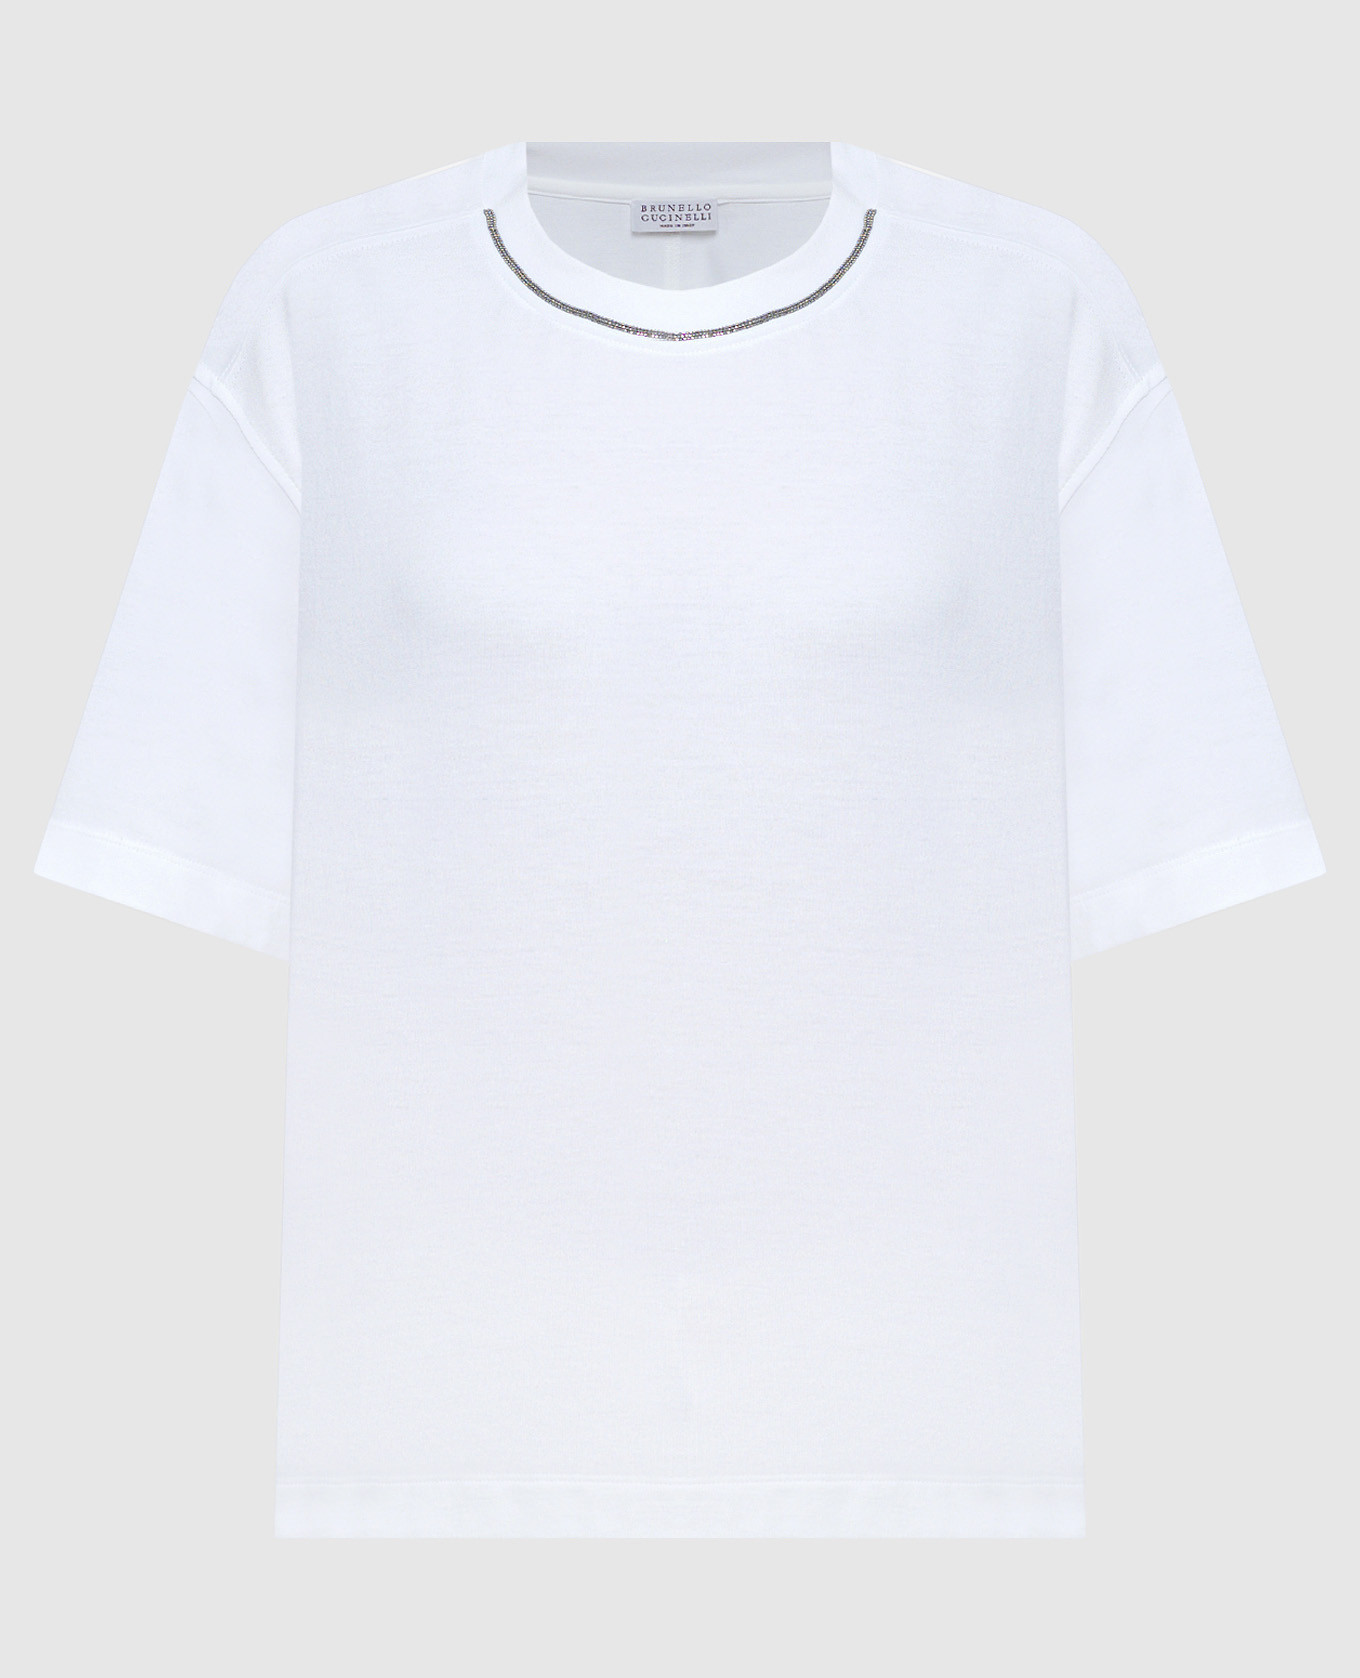 White t-shirt with monil chain made of ekolatuny